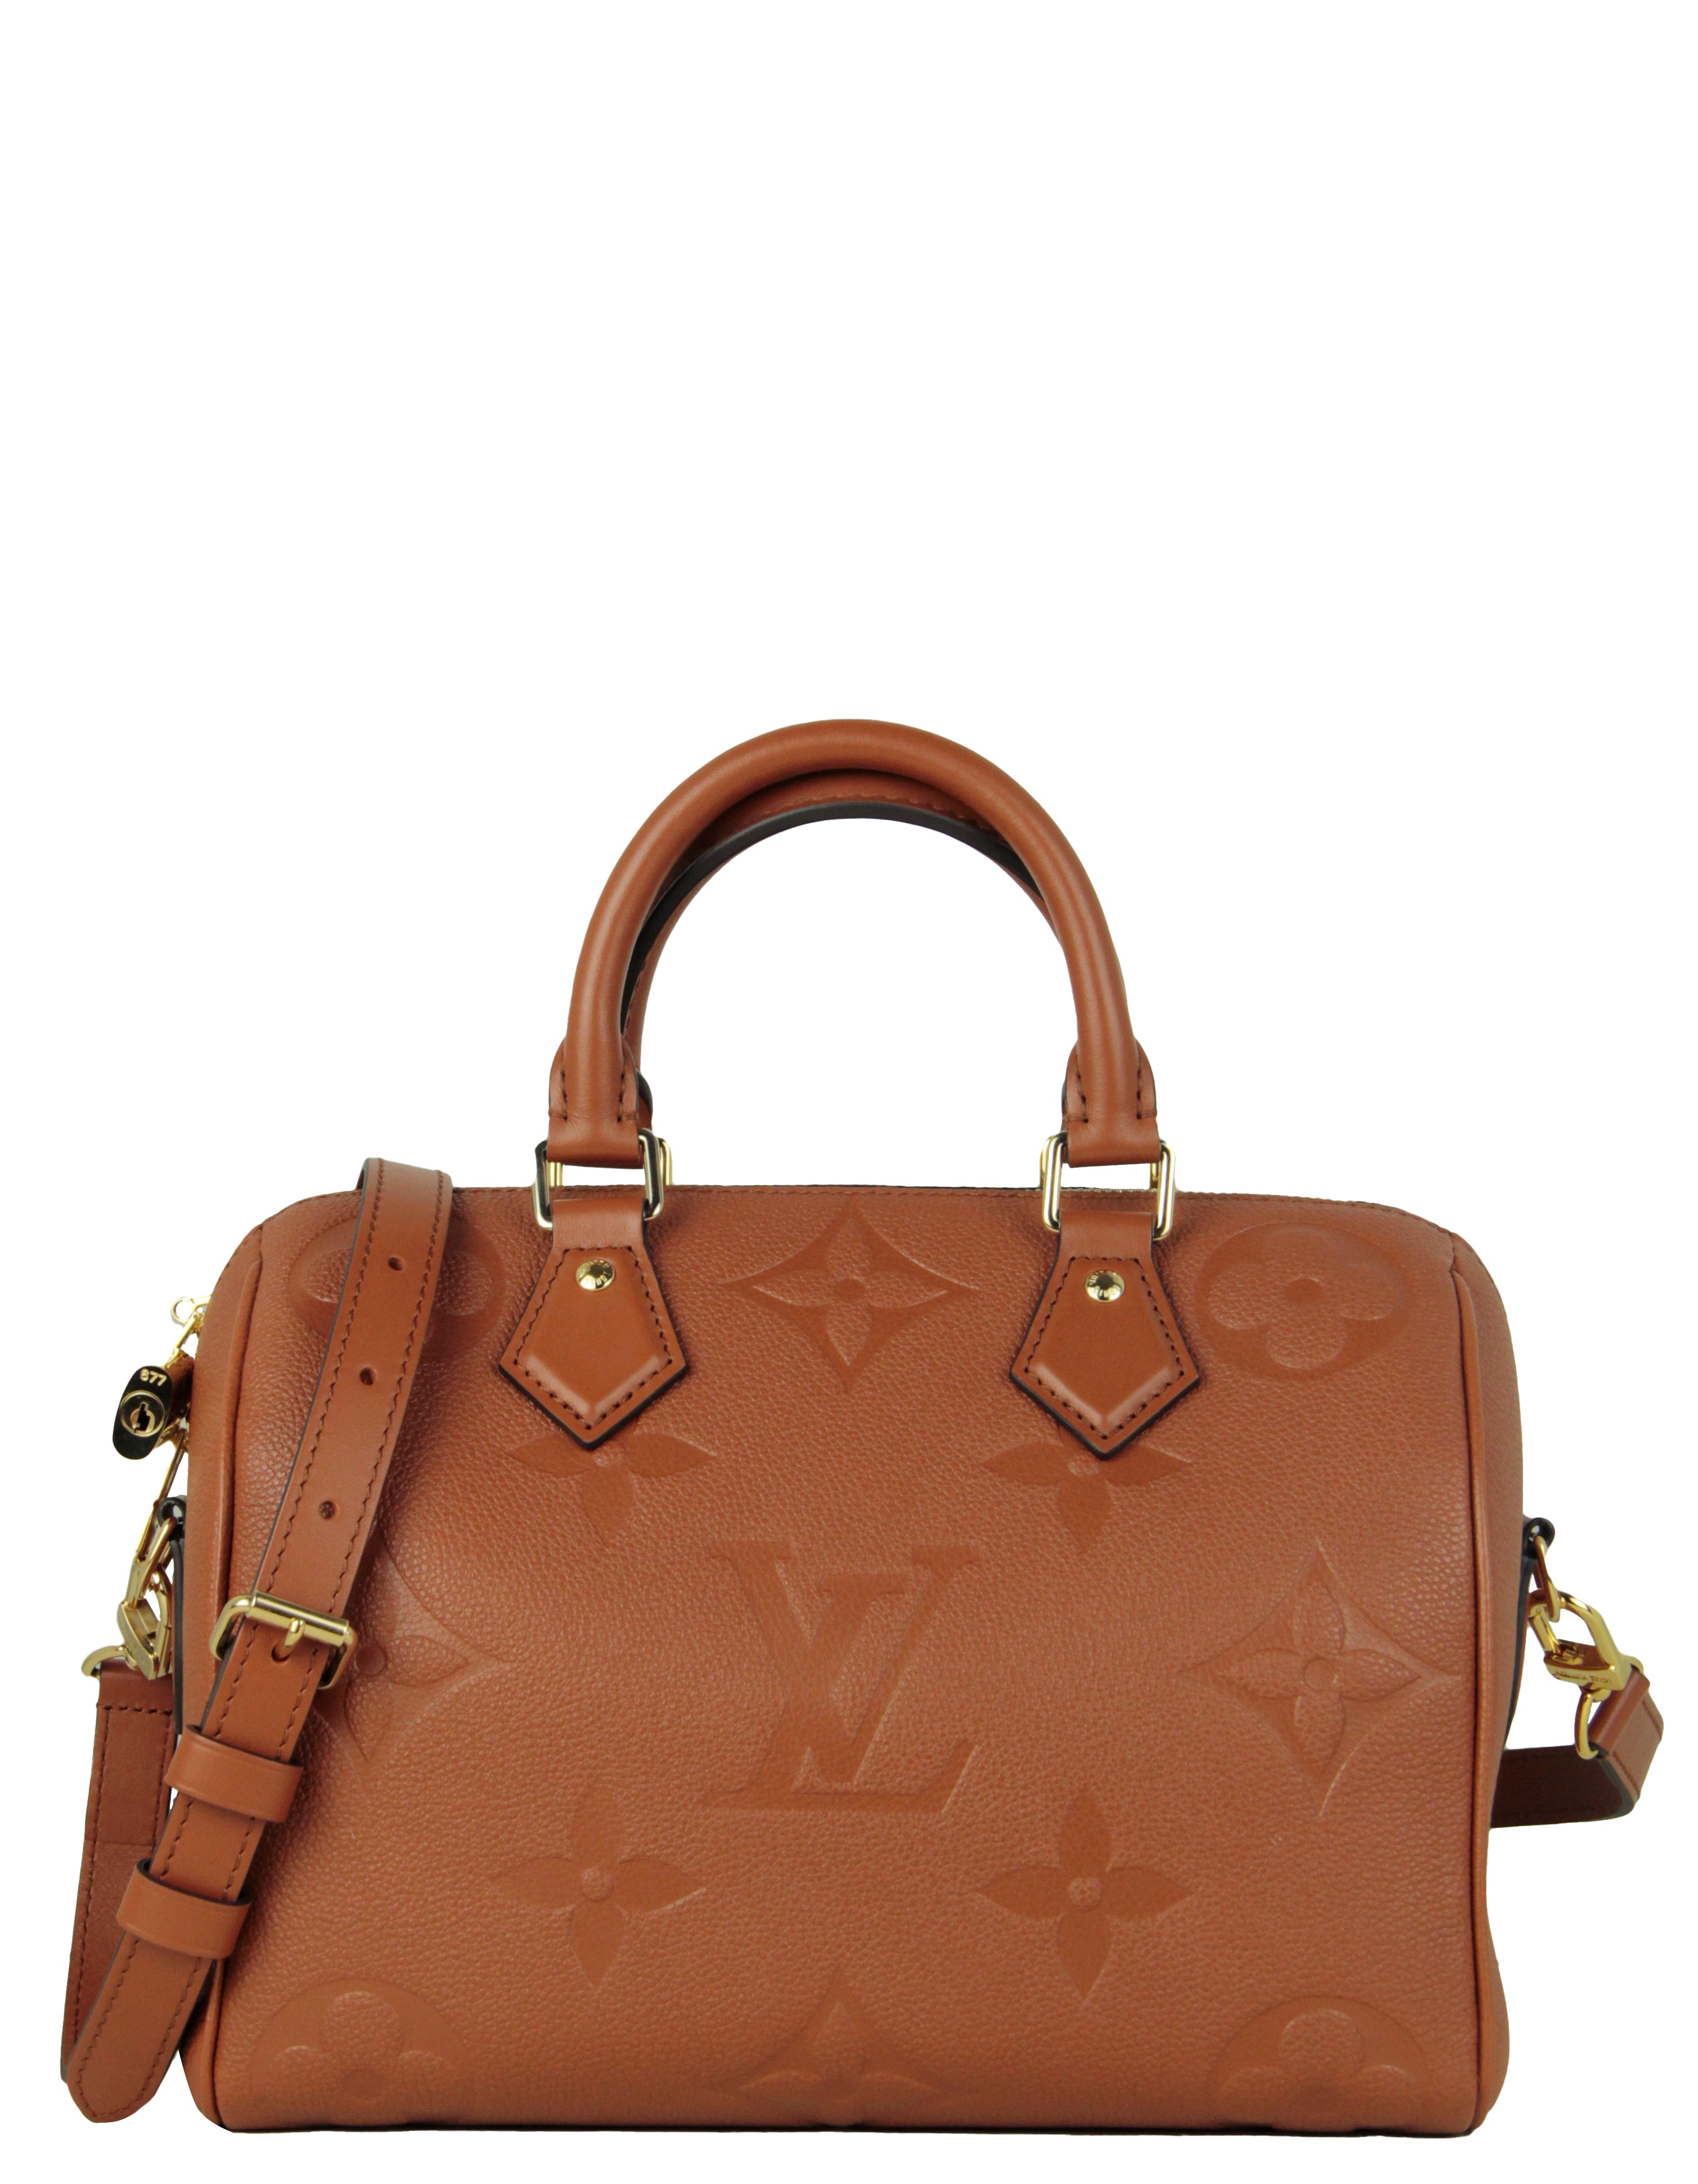 Louis Vuitton Speedy Bandouliere Bag Monogram Canvas 25 Brown 214930187